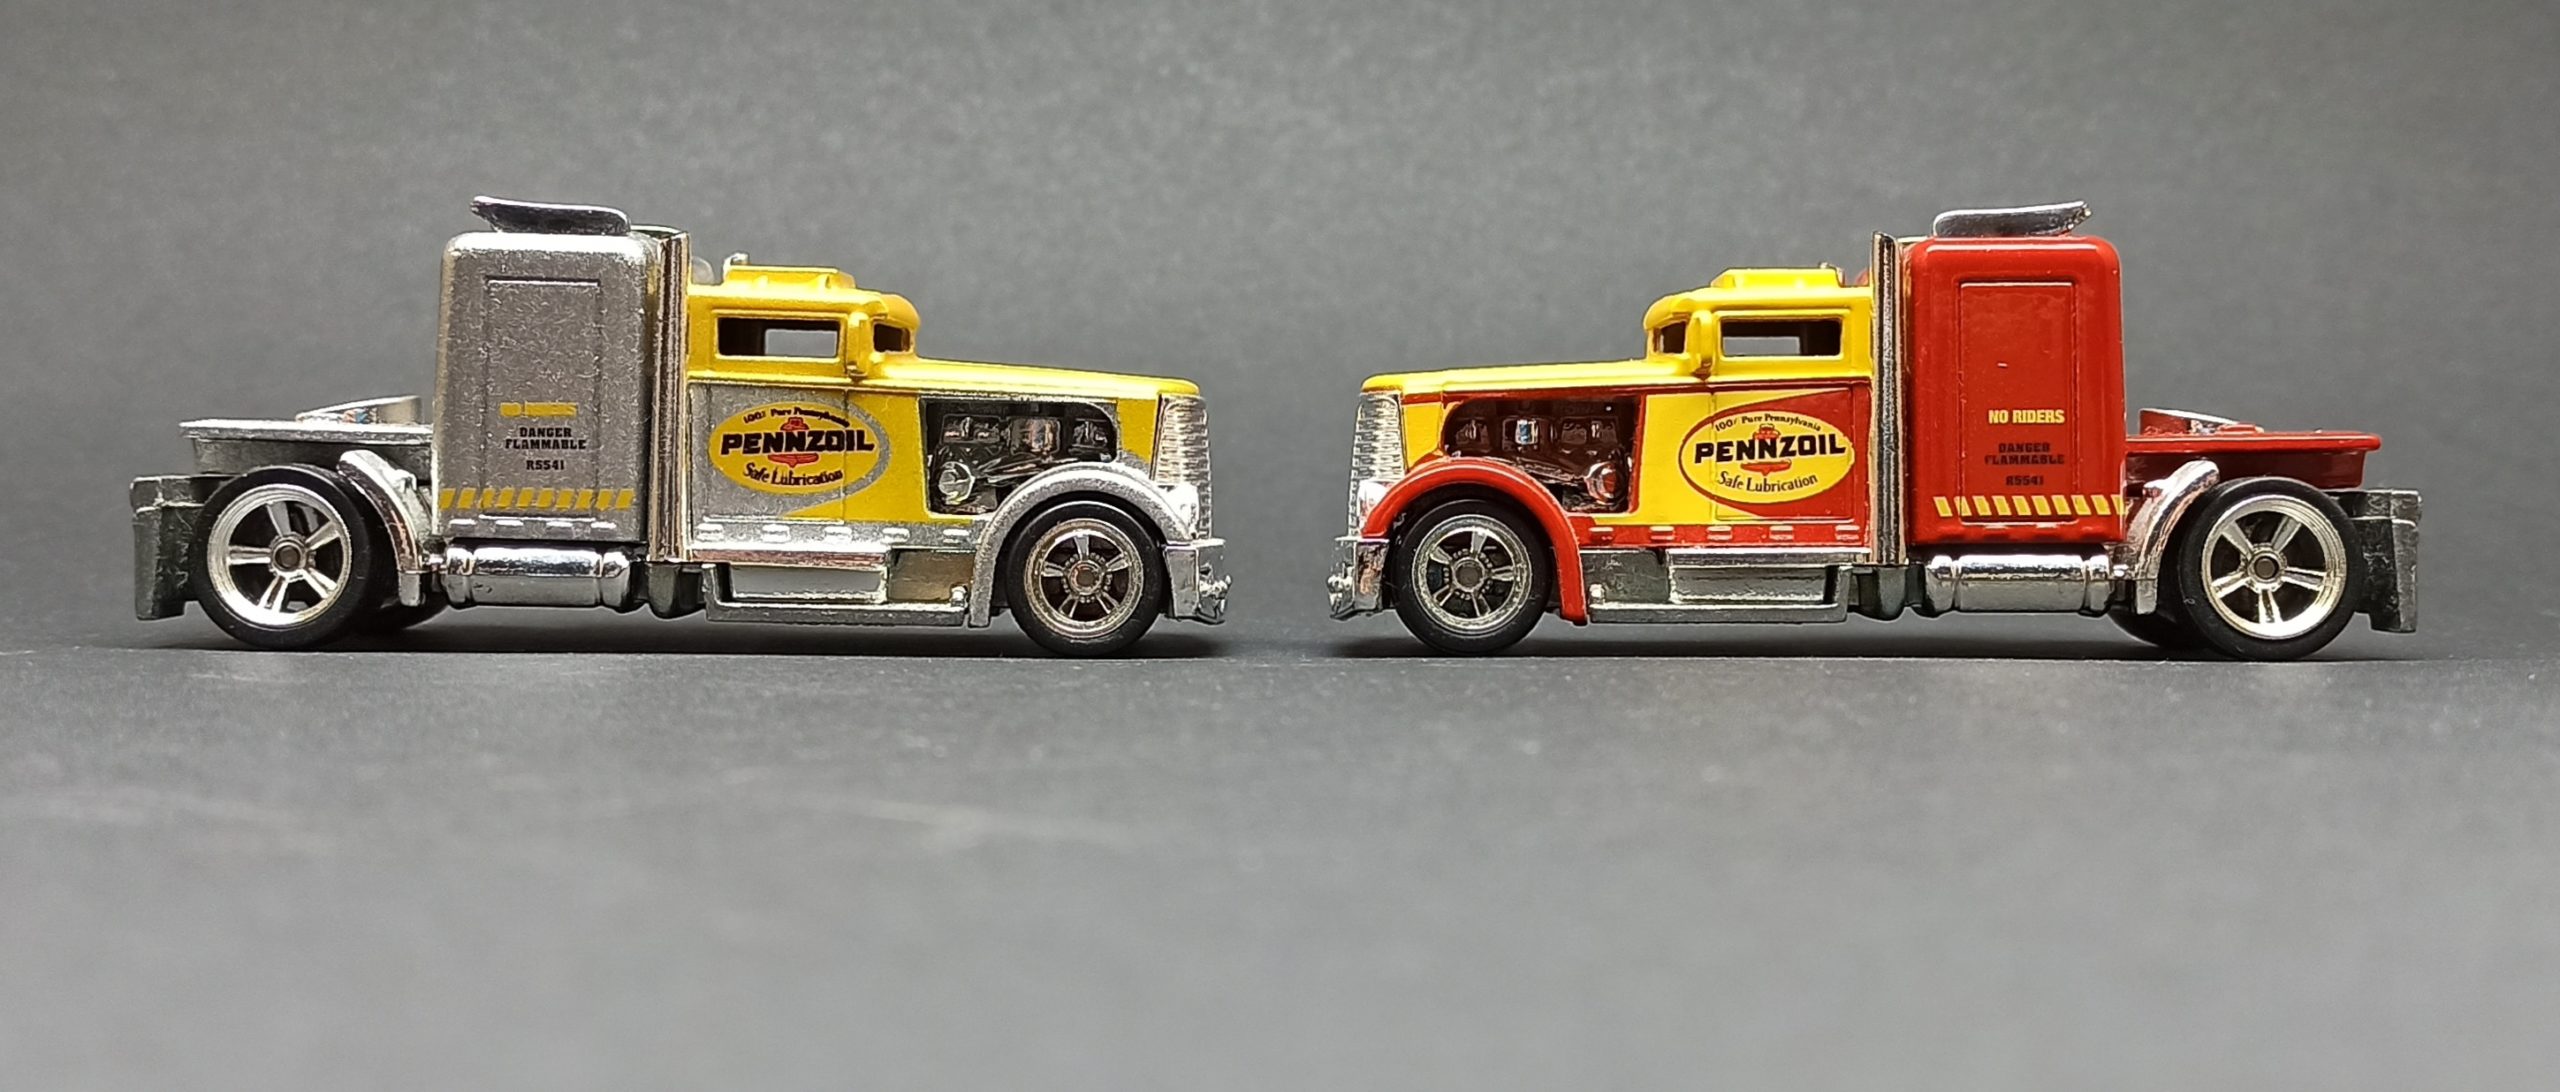 Hot Wheels Convoy Custom (R5541 + R5441) 2010 HW Delivery: Slick Rides 25/34 metallic silver/yellow + burnt orange/yellow (Pennzoil)